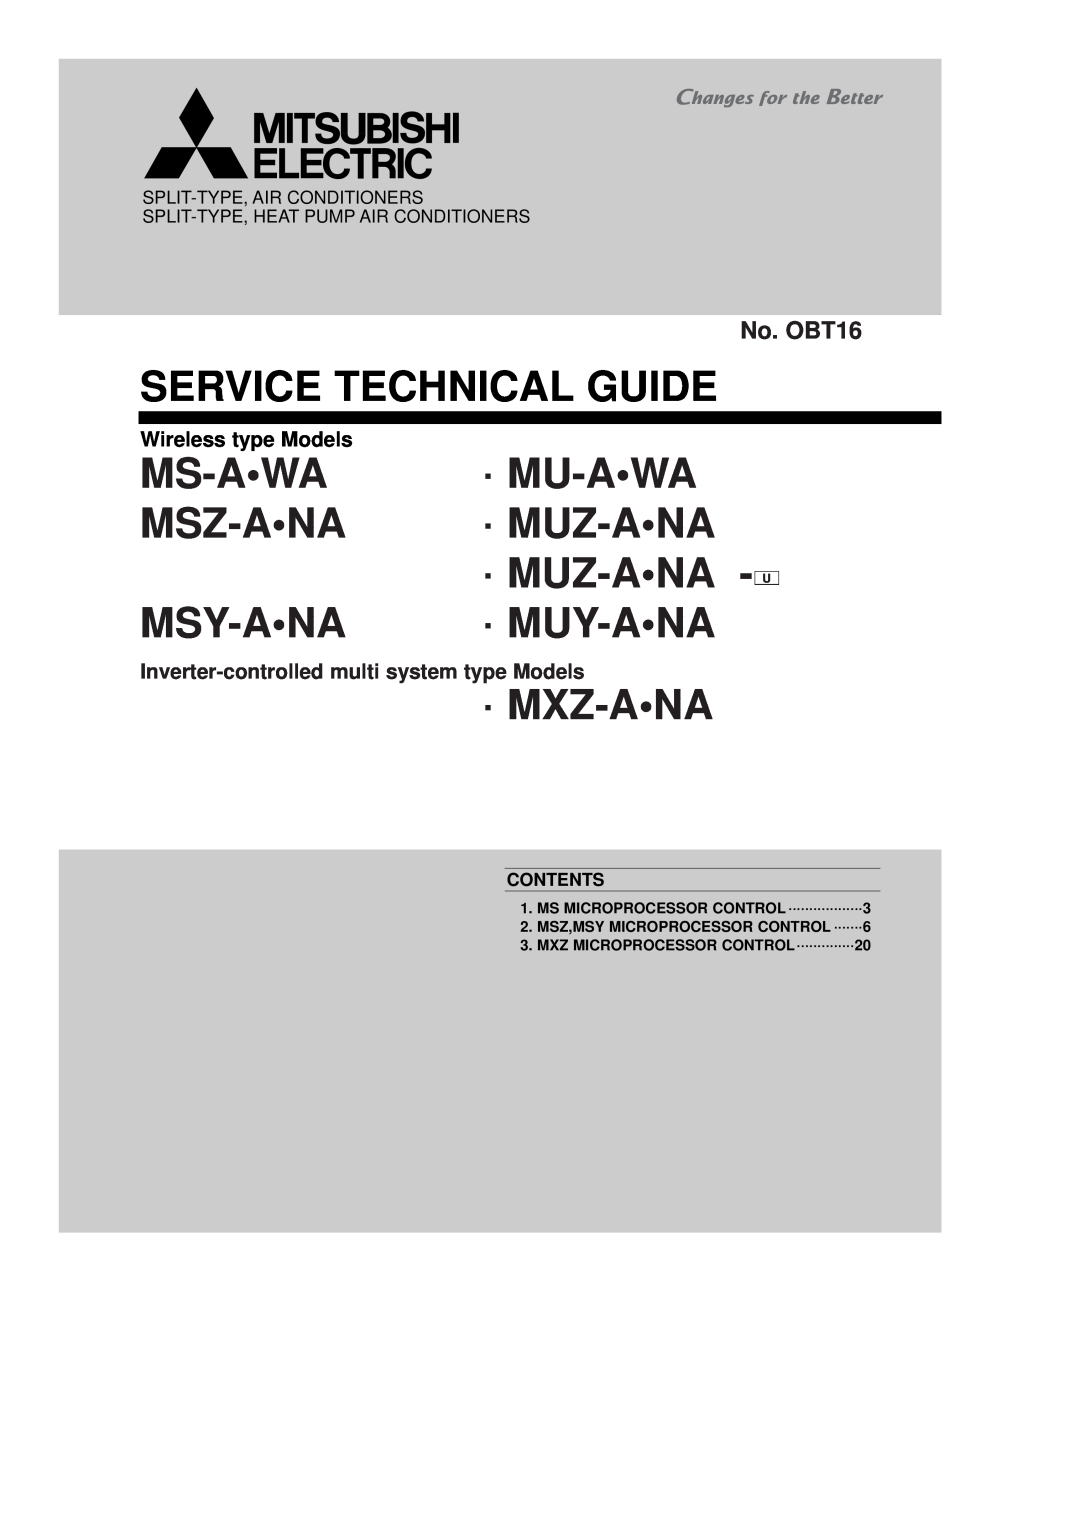 Mitsubishi Electronics MUZ-ANA manual Contents, Ms Microprocessor Control ···········, Service Technical Guide, Ms-Awa 